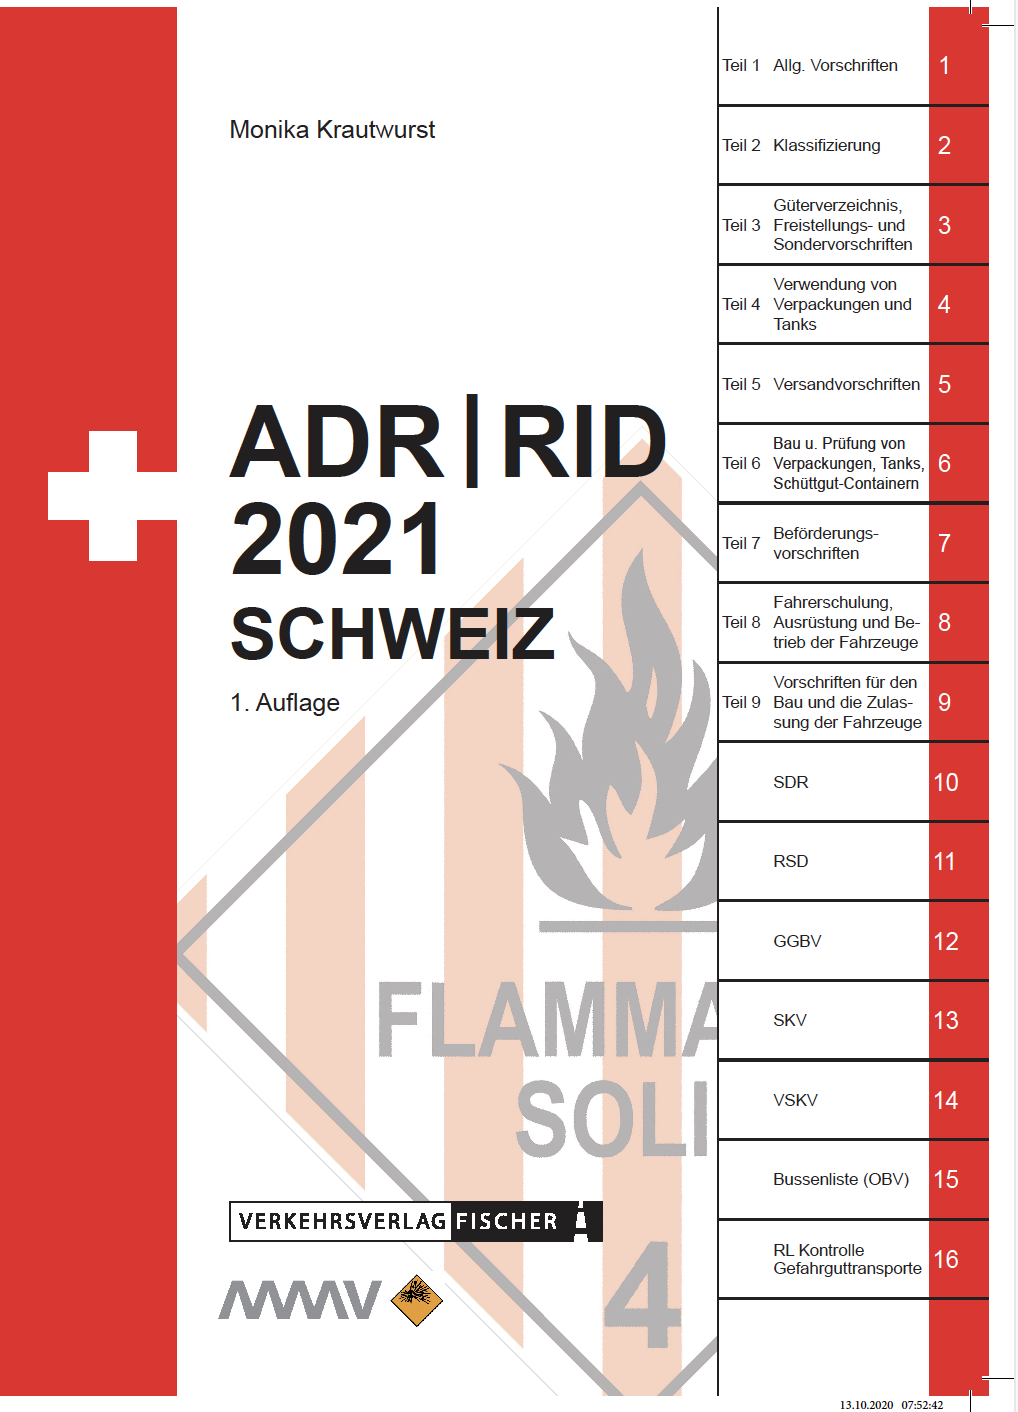 ADR / RID / RSD 2021